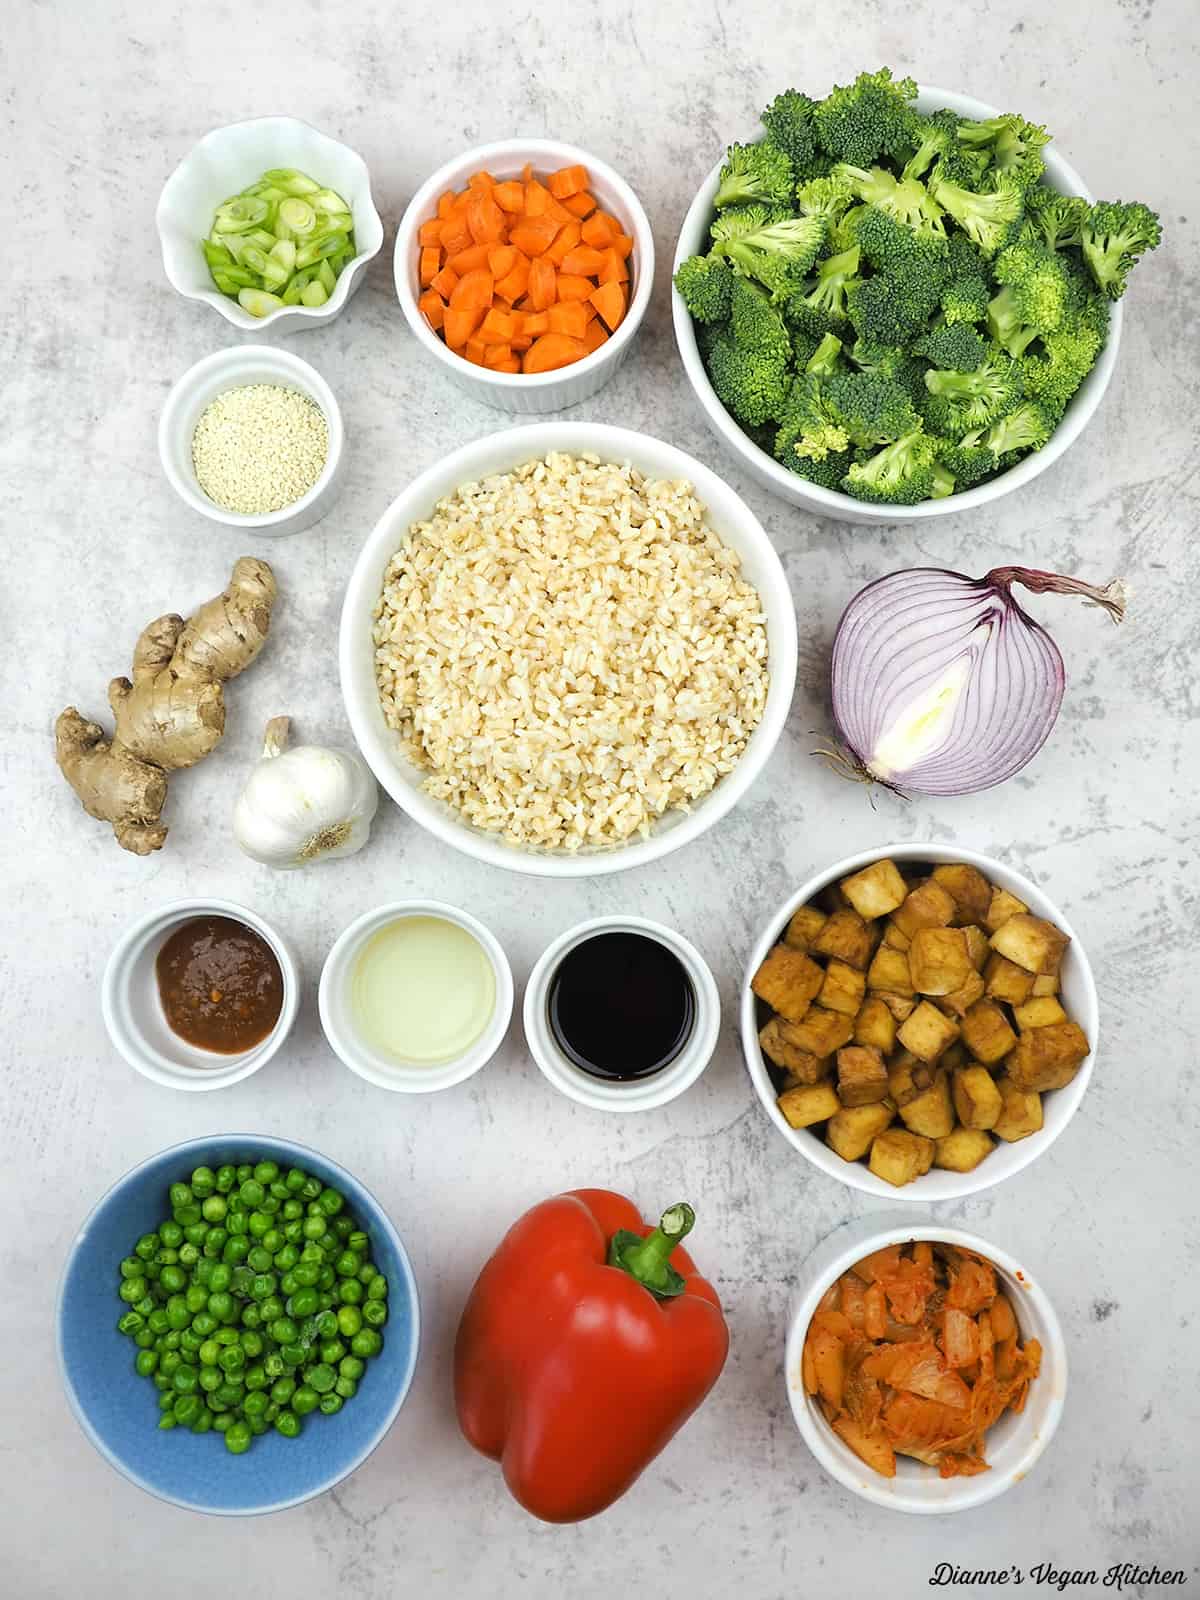 Scallion, carrot, broccoli, rice, vinegar, garlic, ginger, onion, tofu, kimchi, bell pepper, green peas, garlic chili paste, tamari, sesame seeds